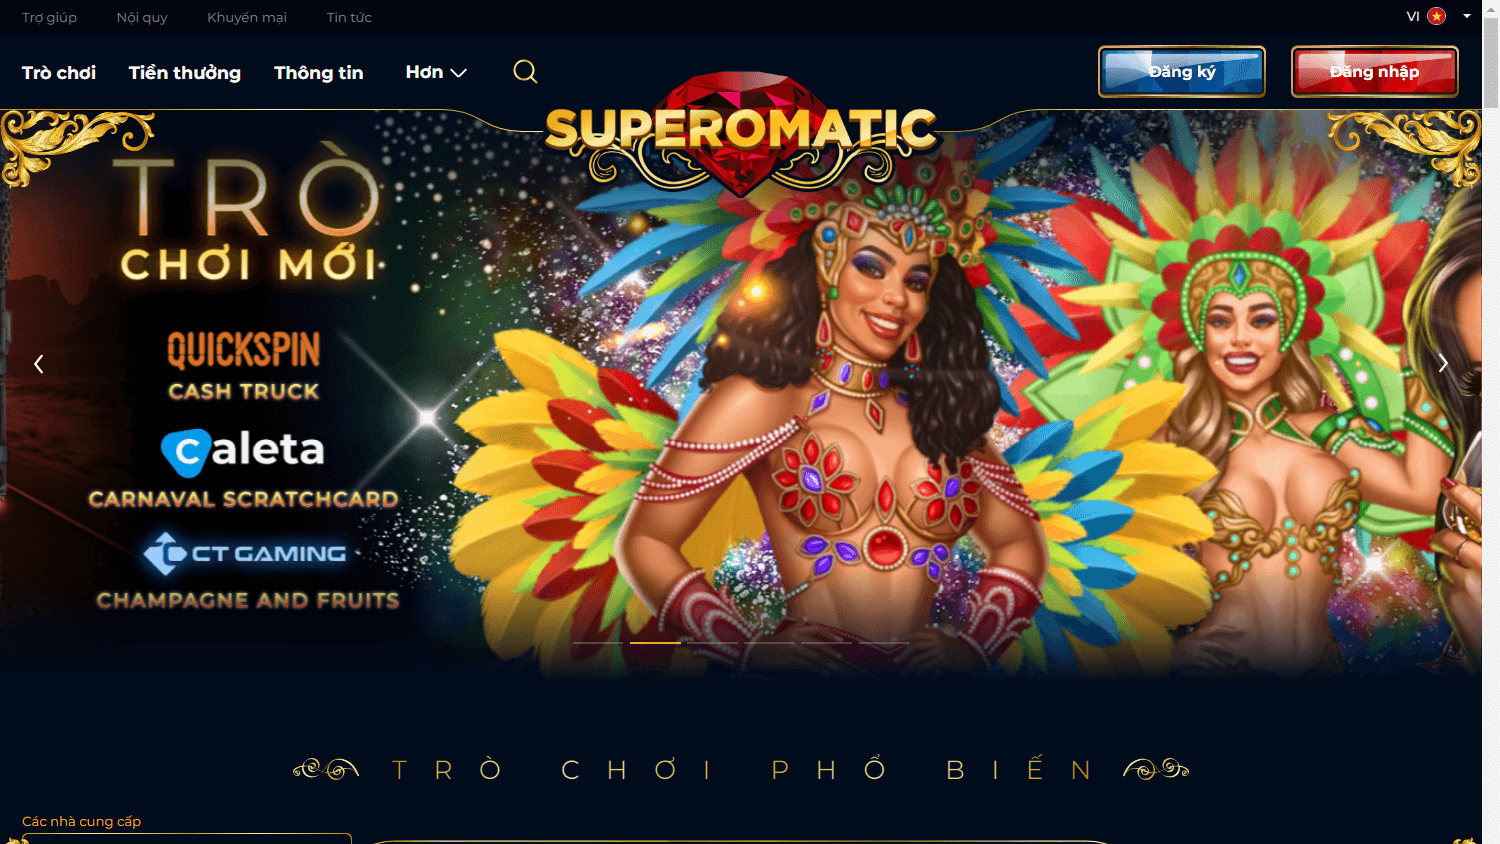 superomatic_casino_homepage_desktop